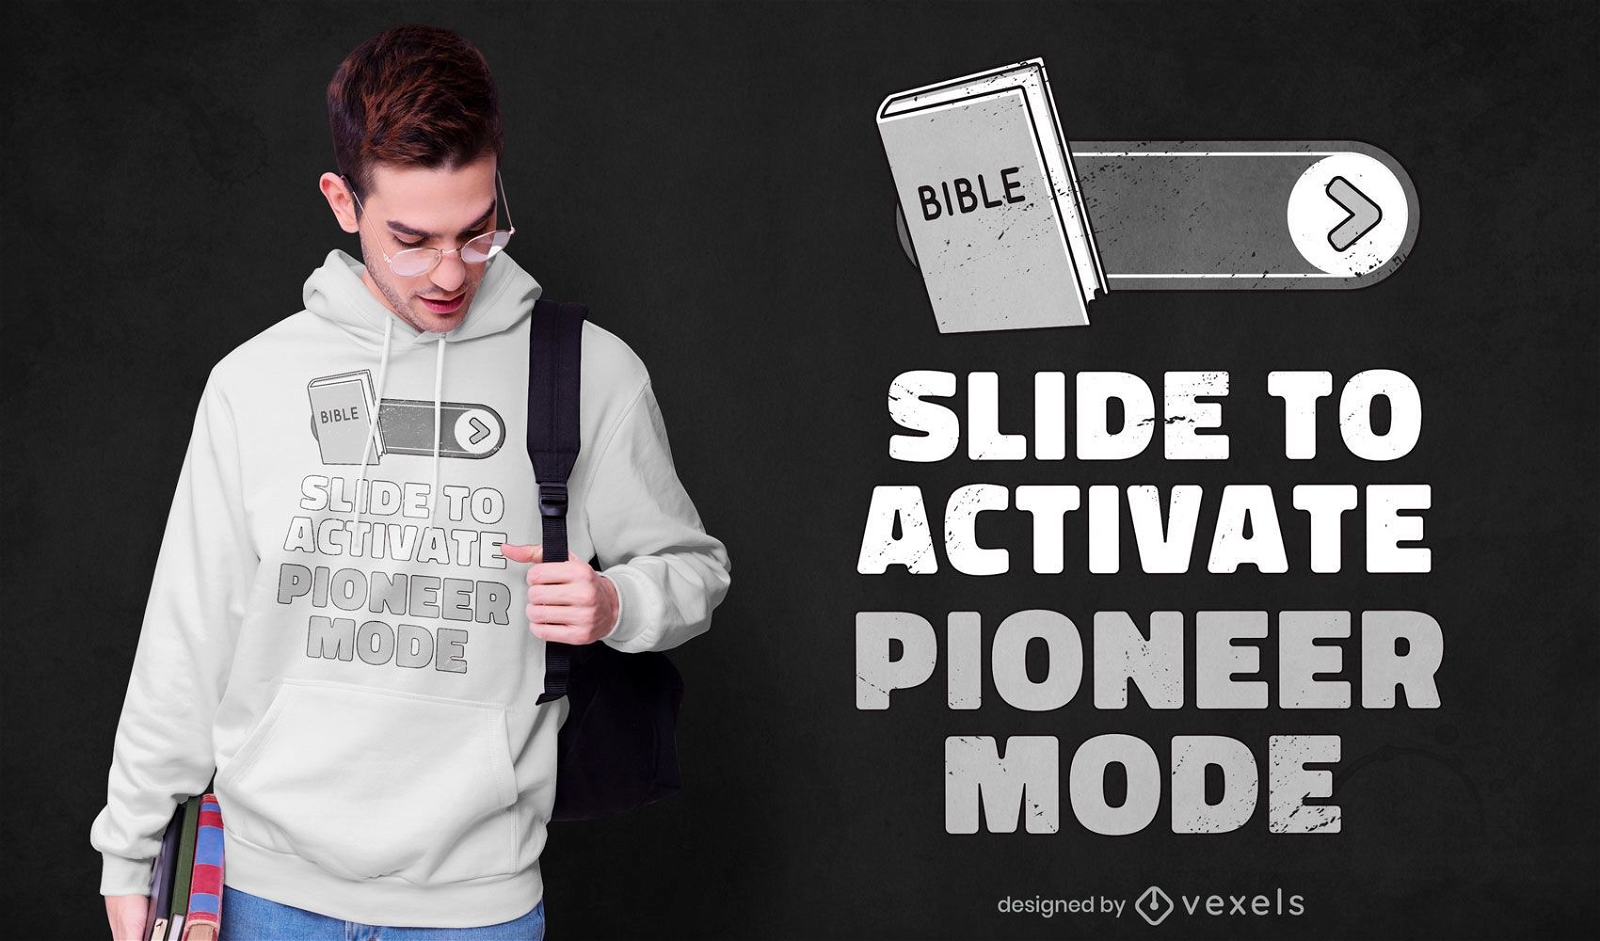 Bible pioneer quote t-shirt design